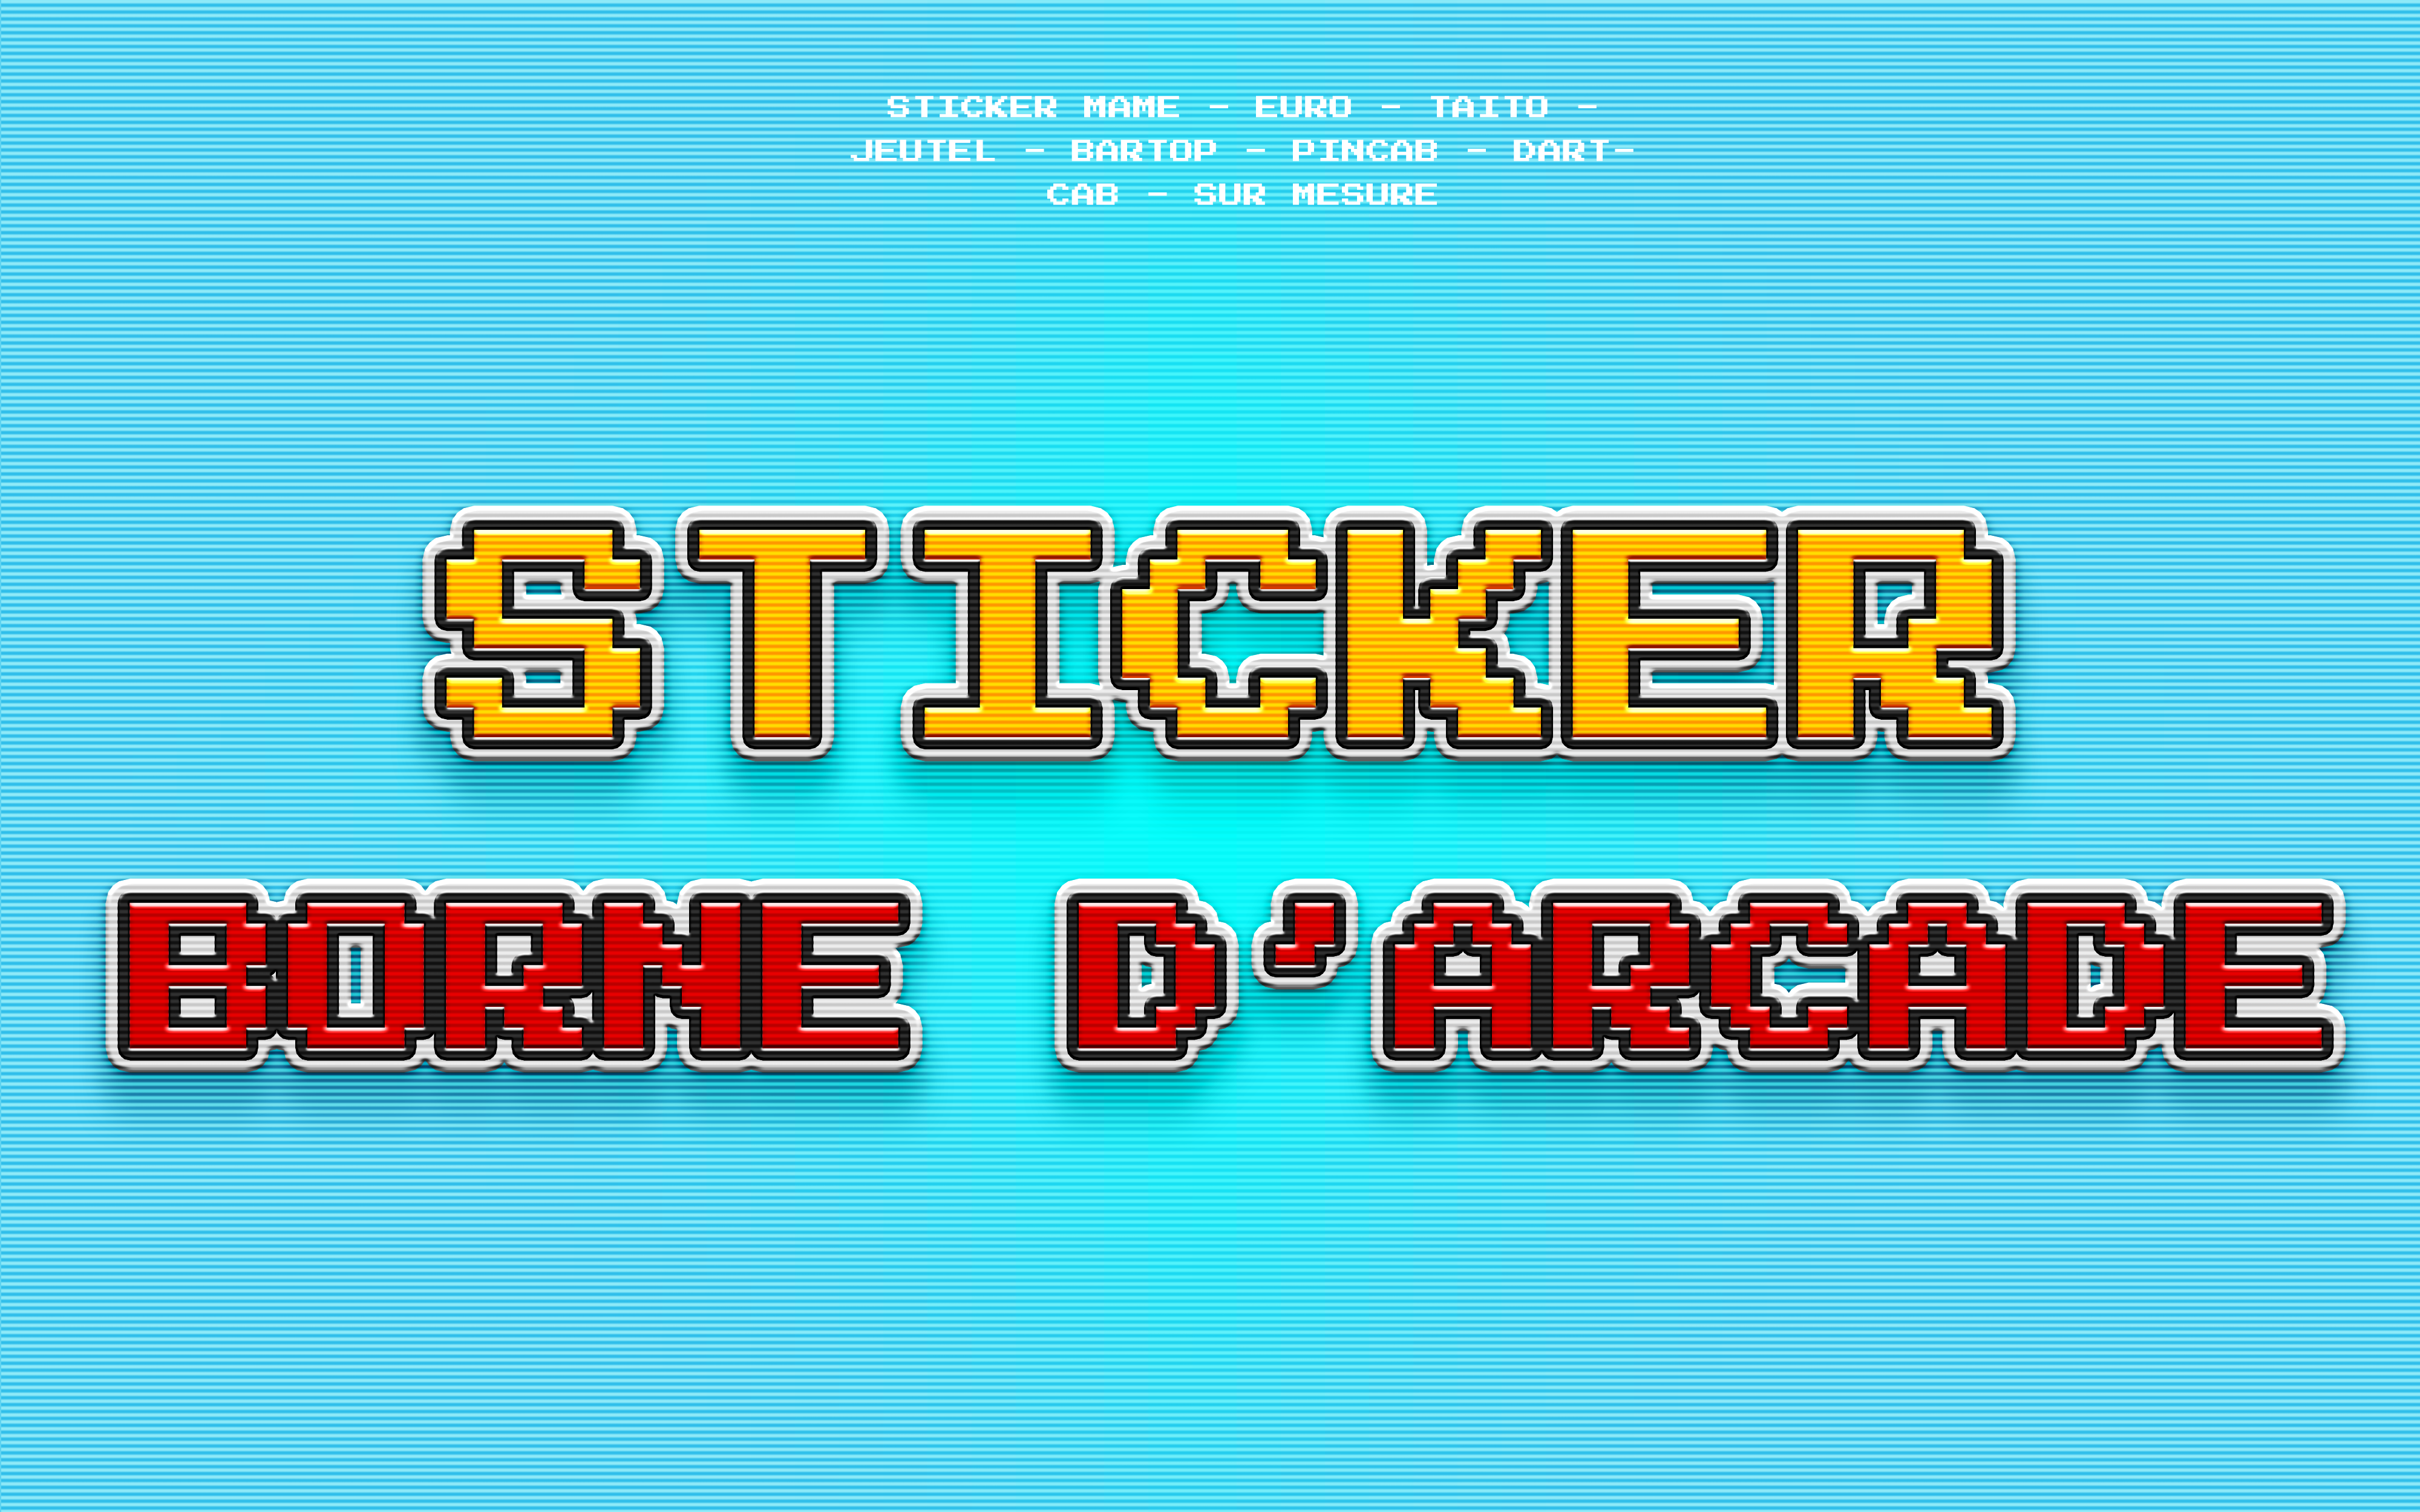 Stickers Borne Arcade - Modèle Dragon Ball 2